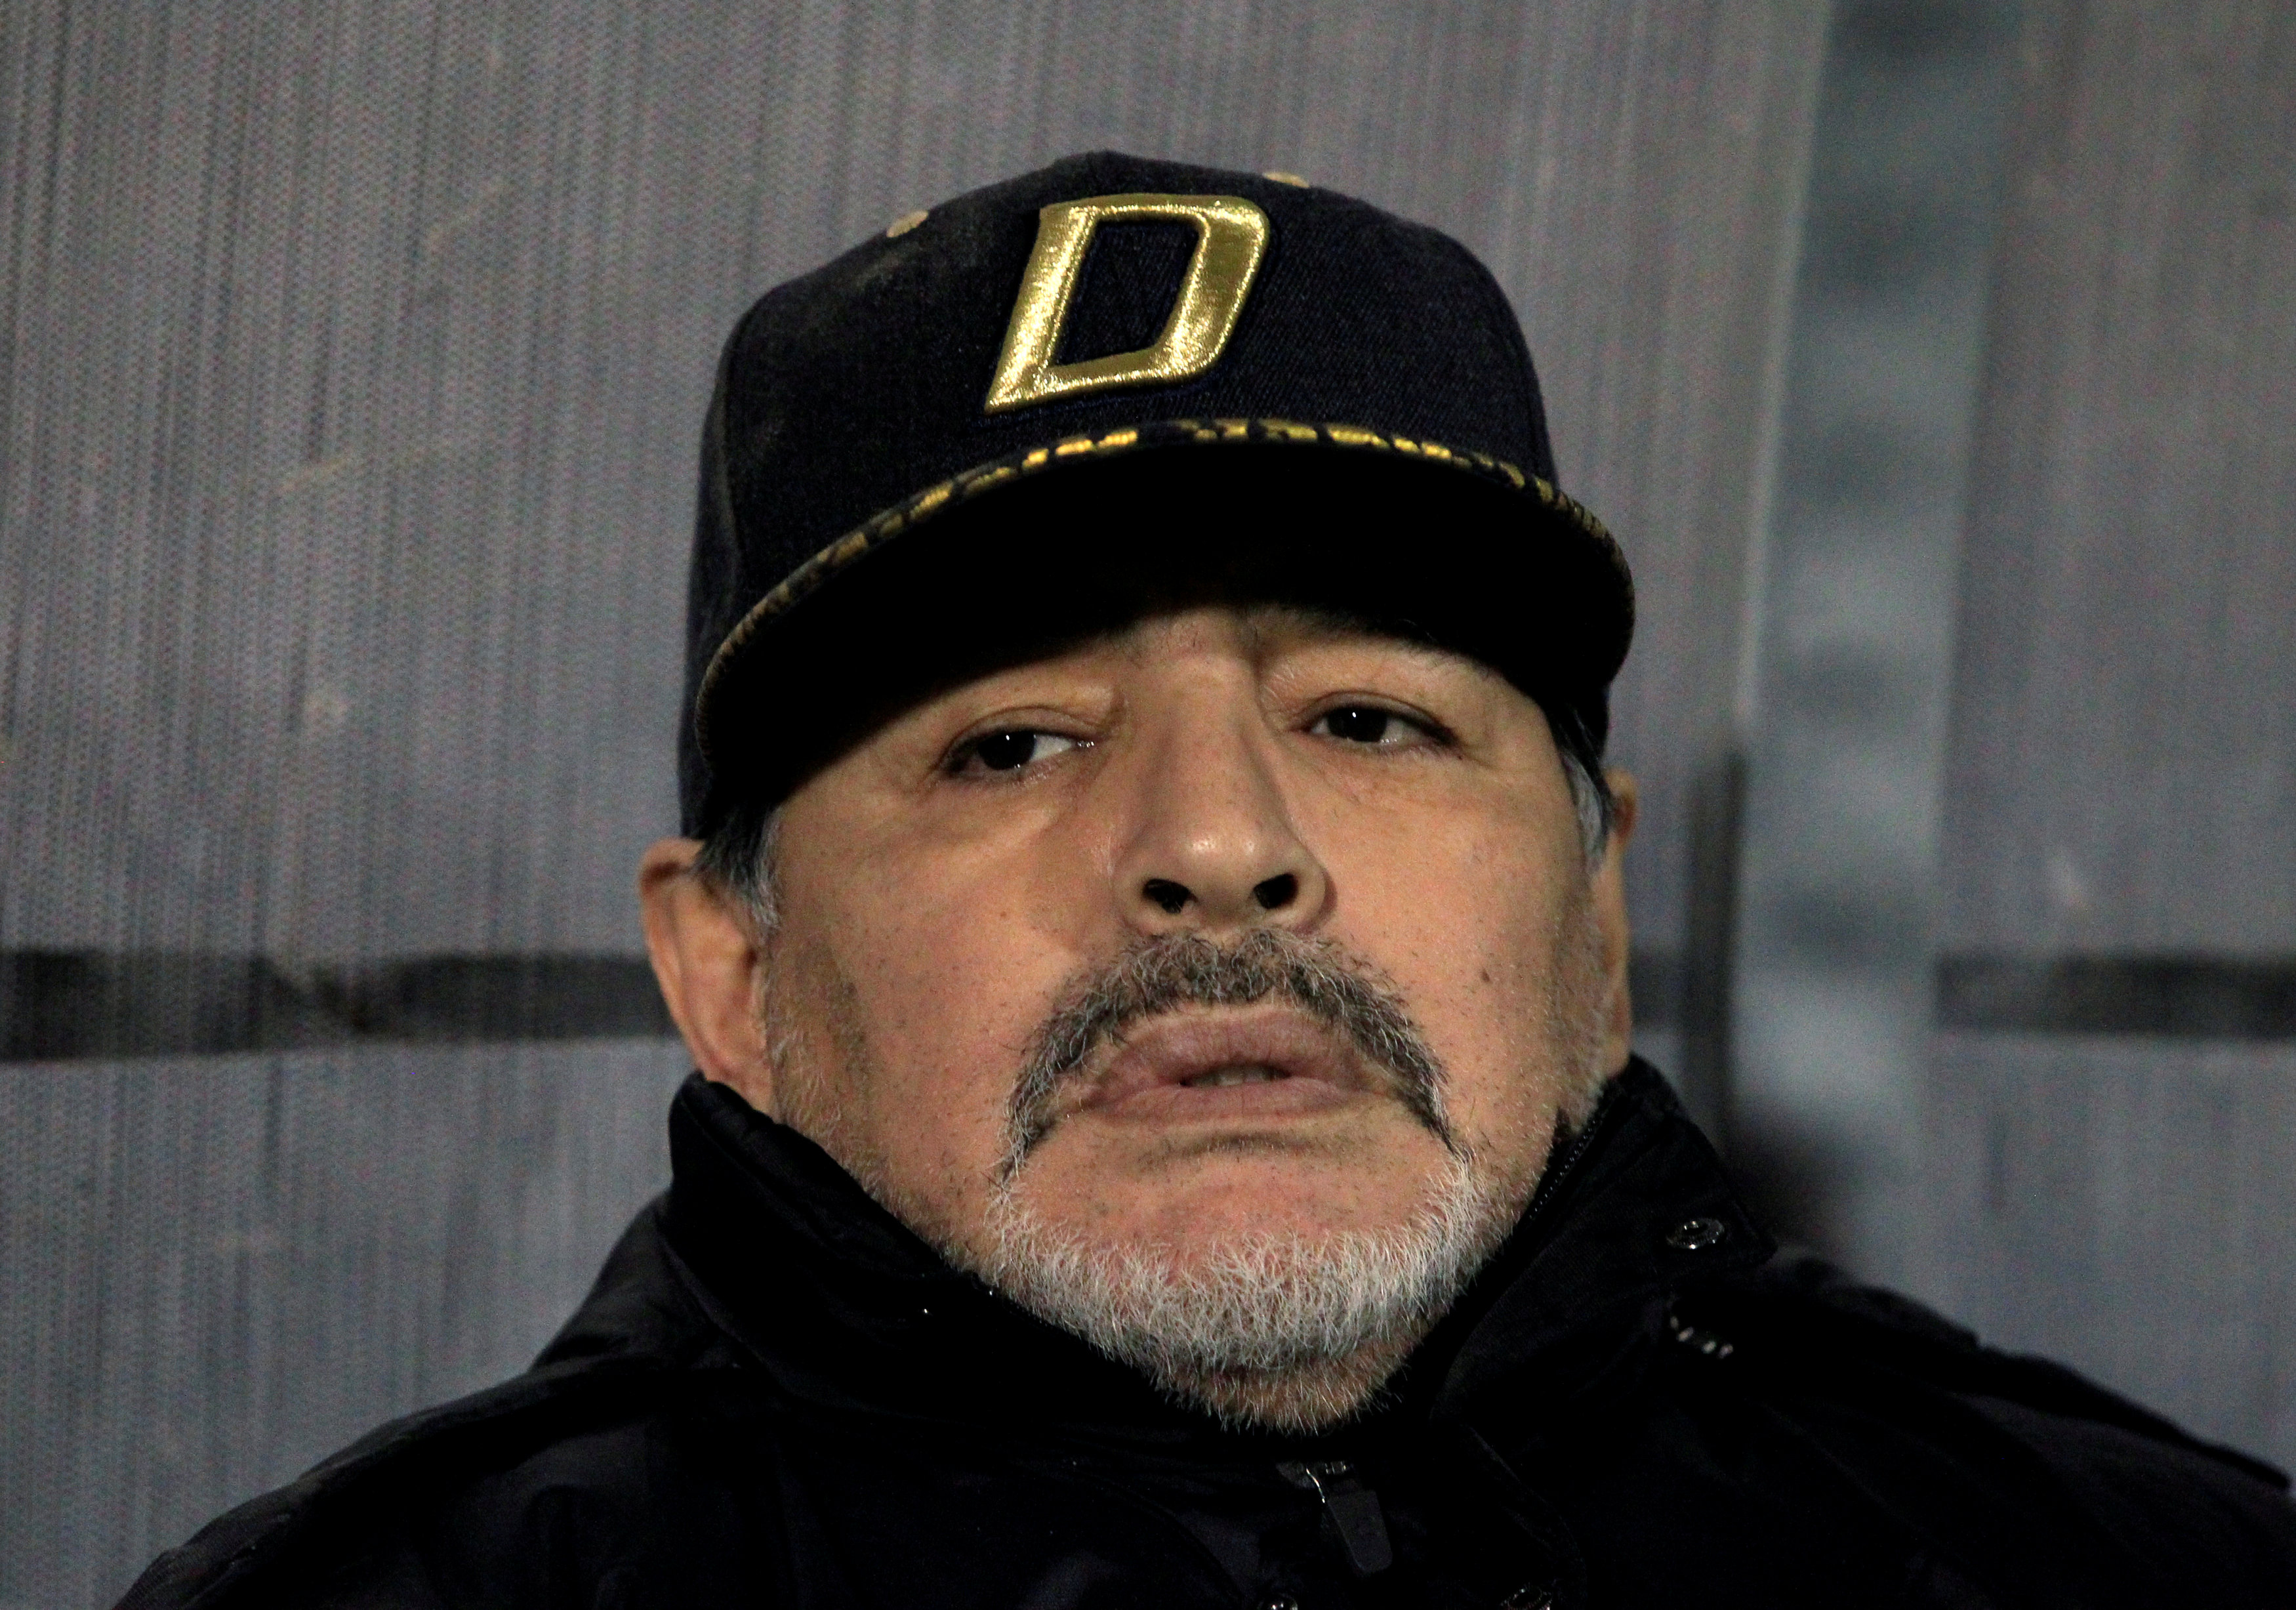 Revelan que a Diego Maradona lo drogaban para que “no molestara” en las noches